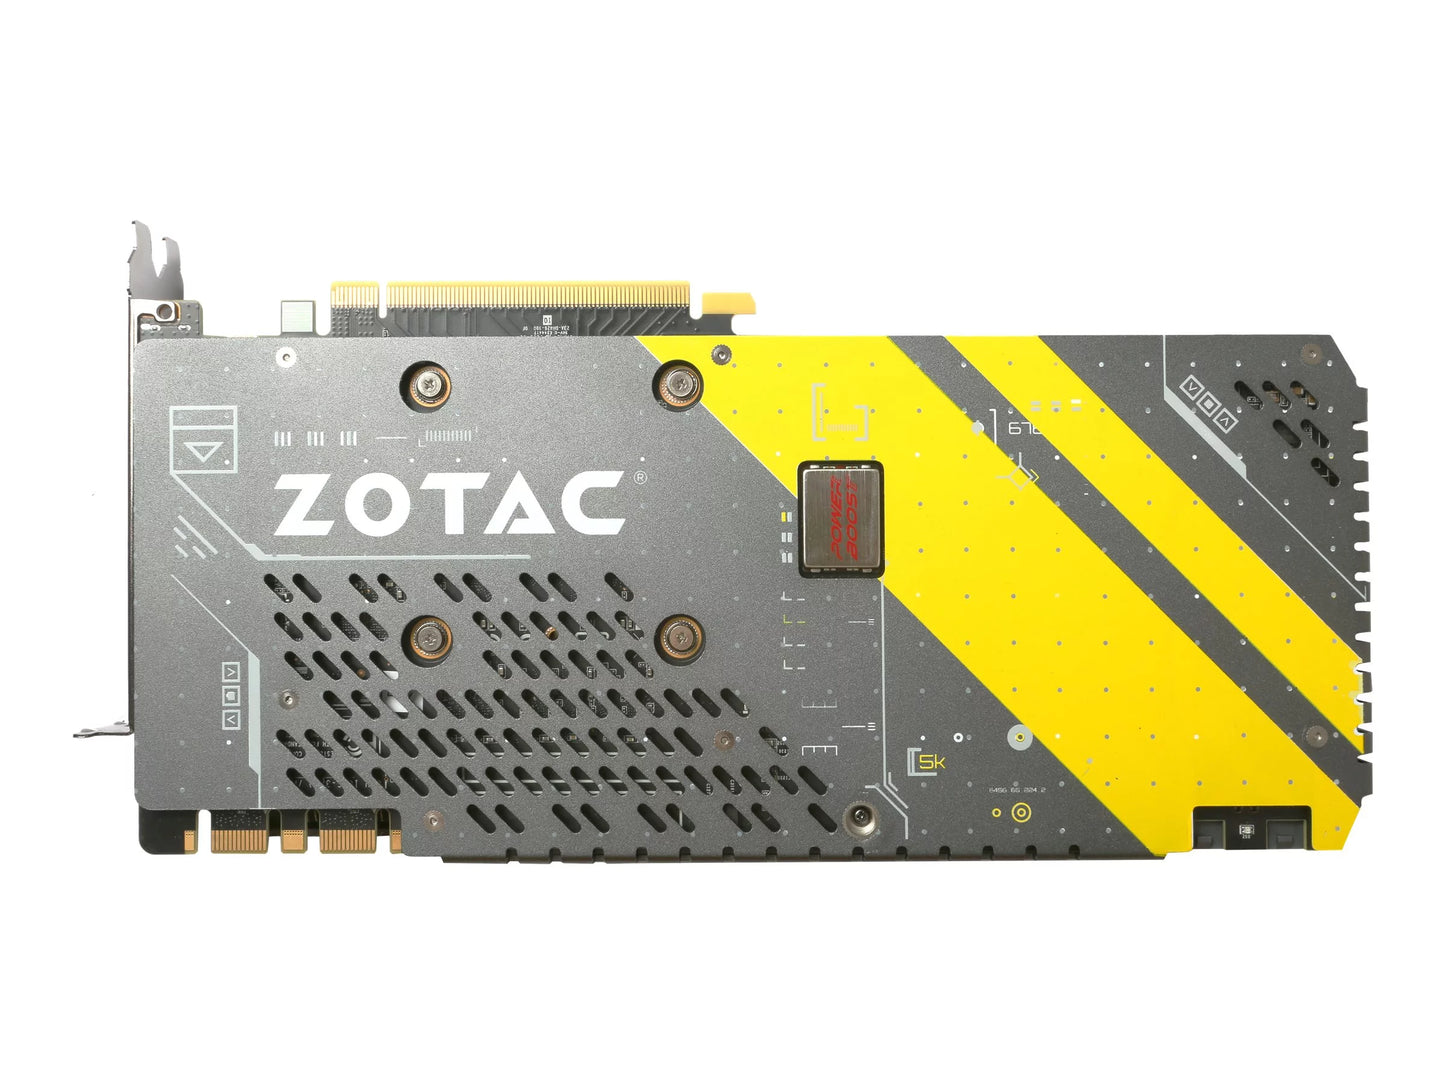 ZOTAC GeForce GTX 1070 - AMP! Edition - graphics card - GF GTX 1070 - 8 GB GDDR5 - PCIe 3.0 x16 - DVI, HDMI, 3 x DisplayPort